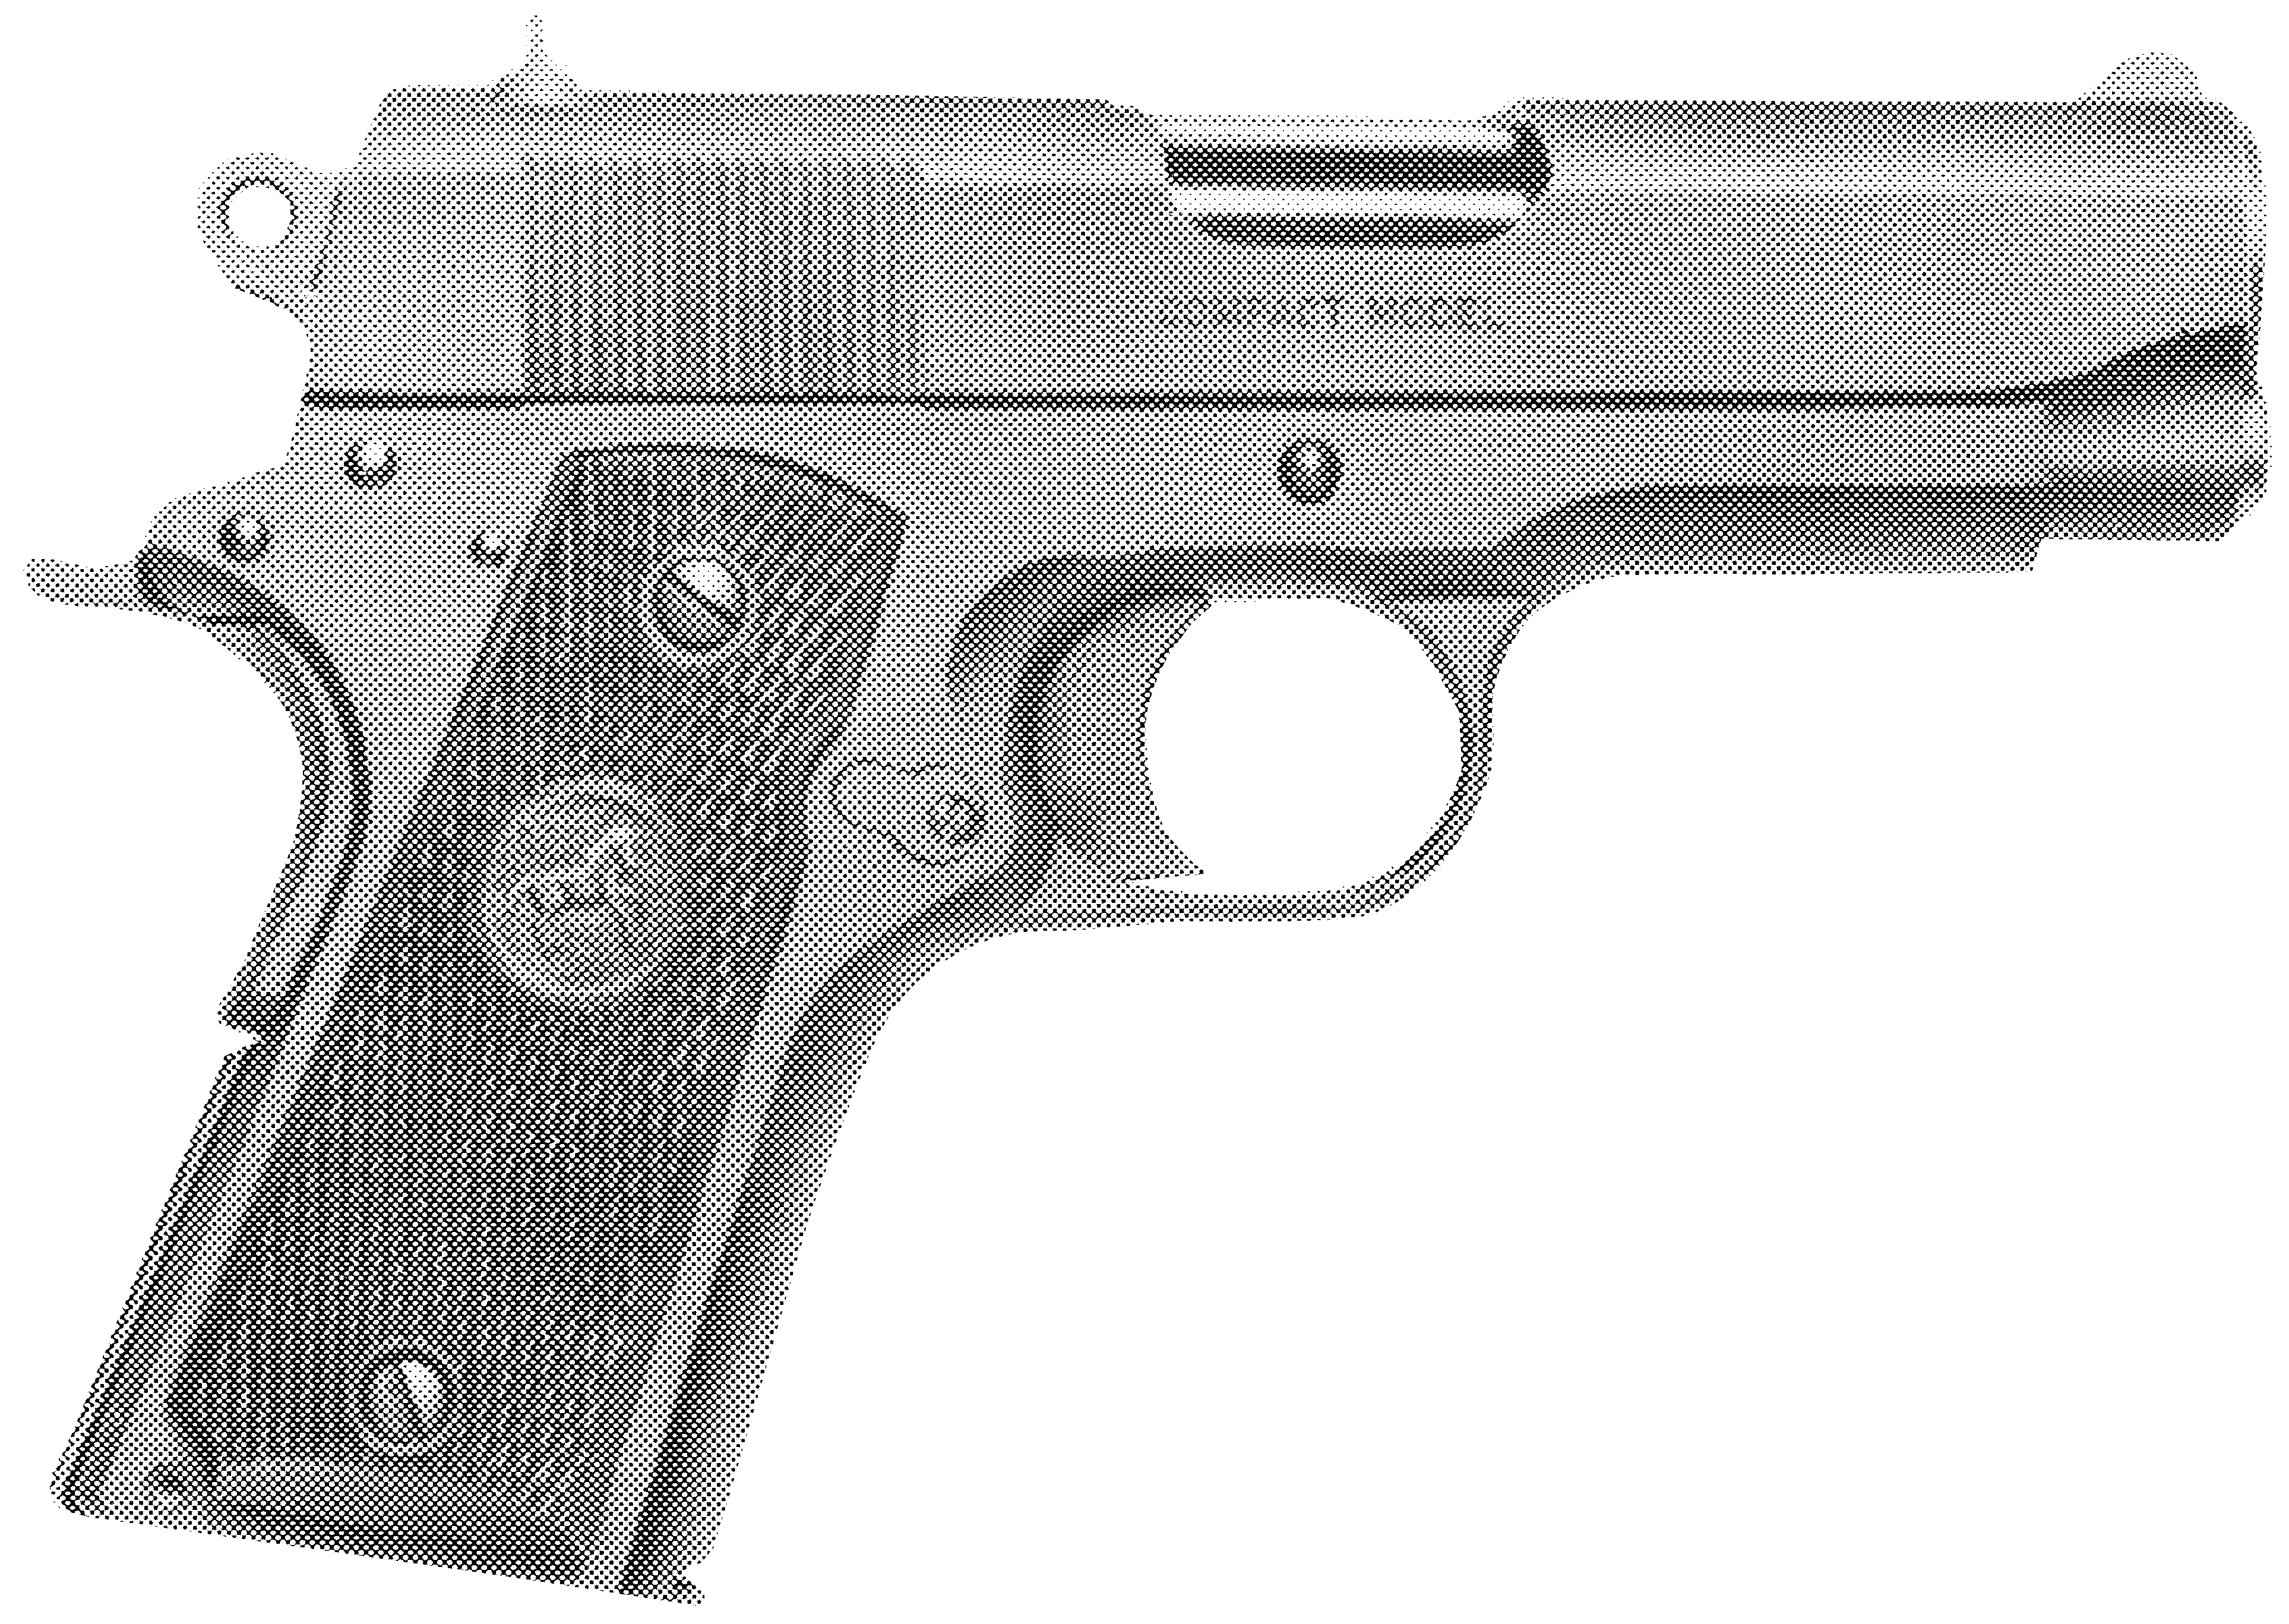 M1991A1 Compact